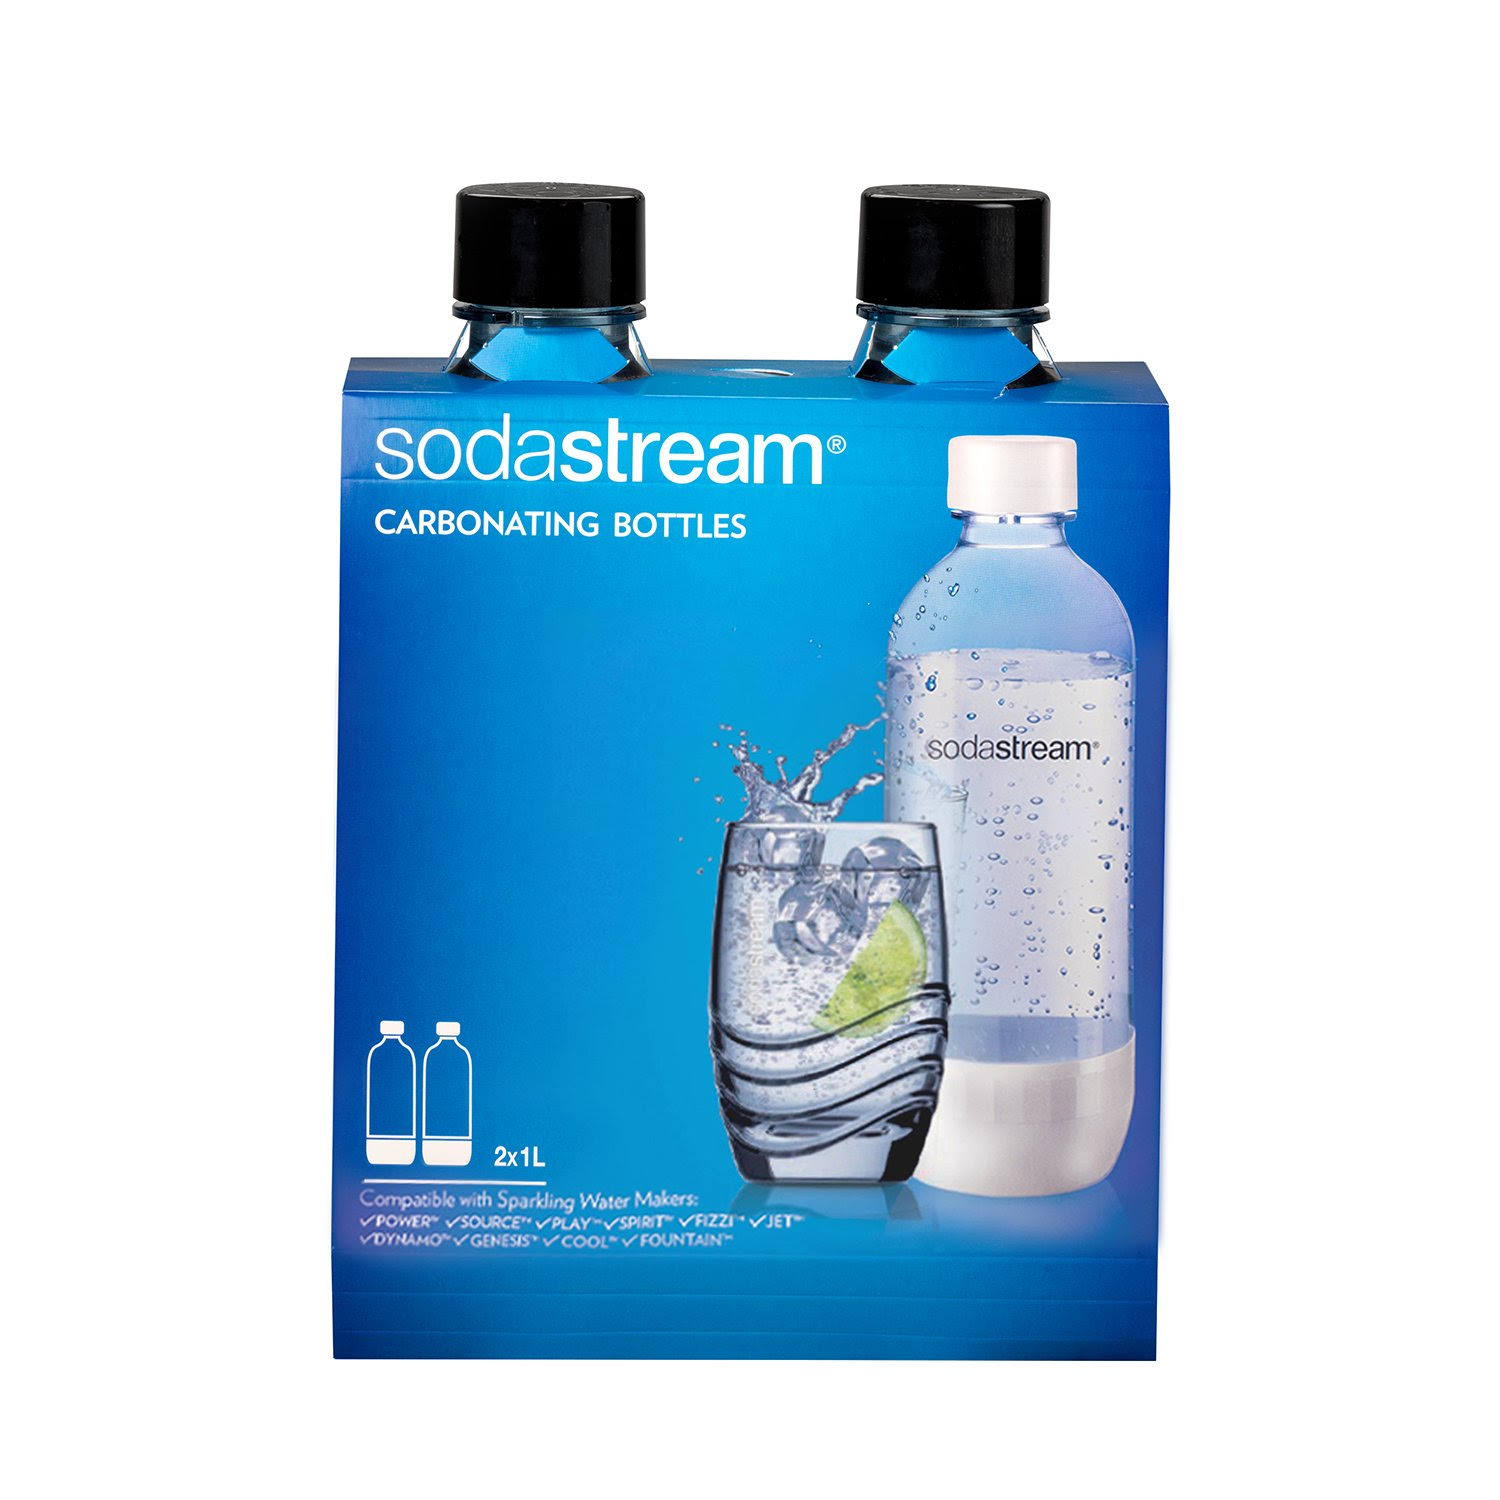 SodaStream Carbonating Bottles - Black, 1l, 2 Pack